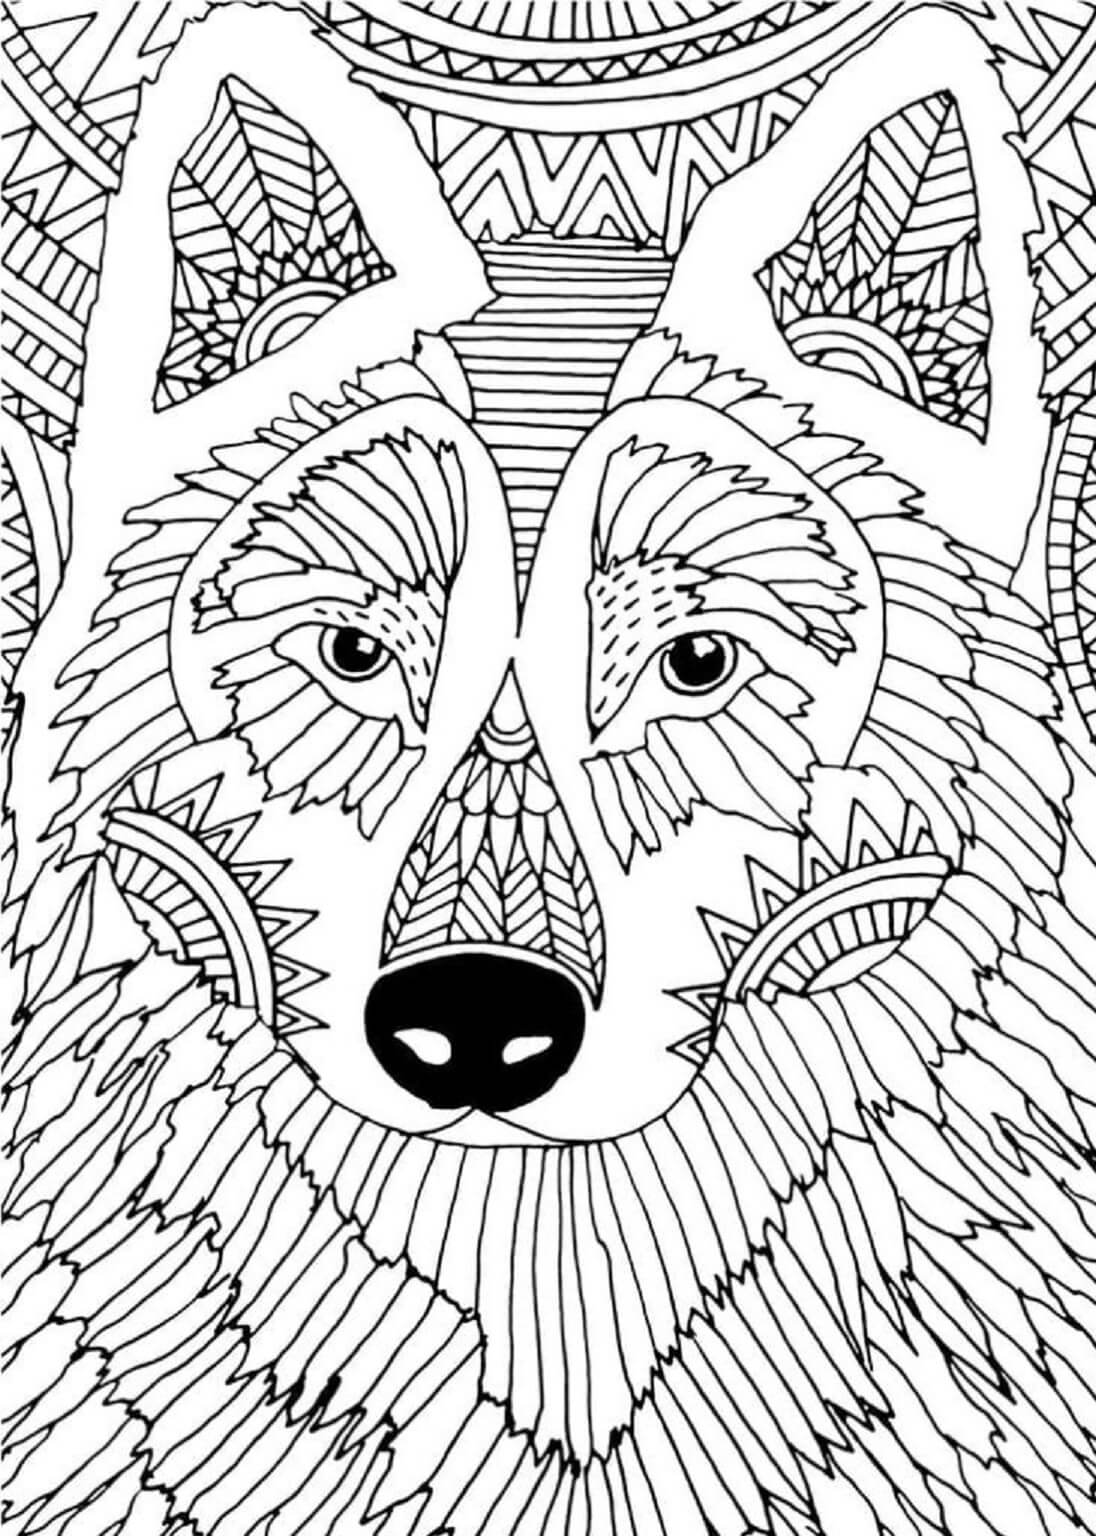 Mandala Wolf Coloring Page - Sheet 10 Mandalas